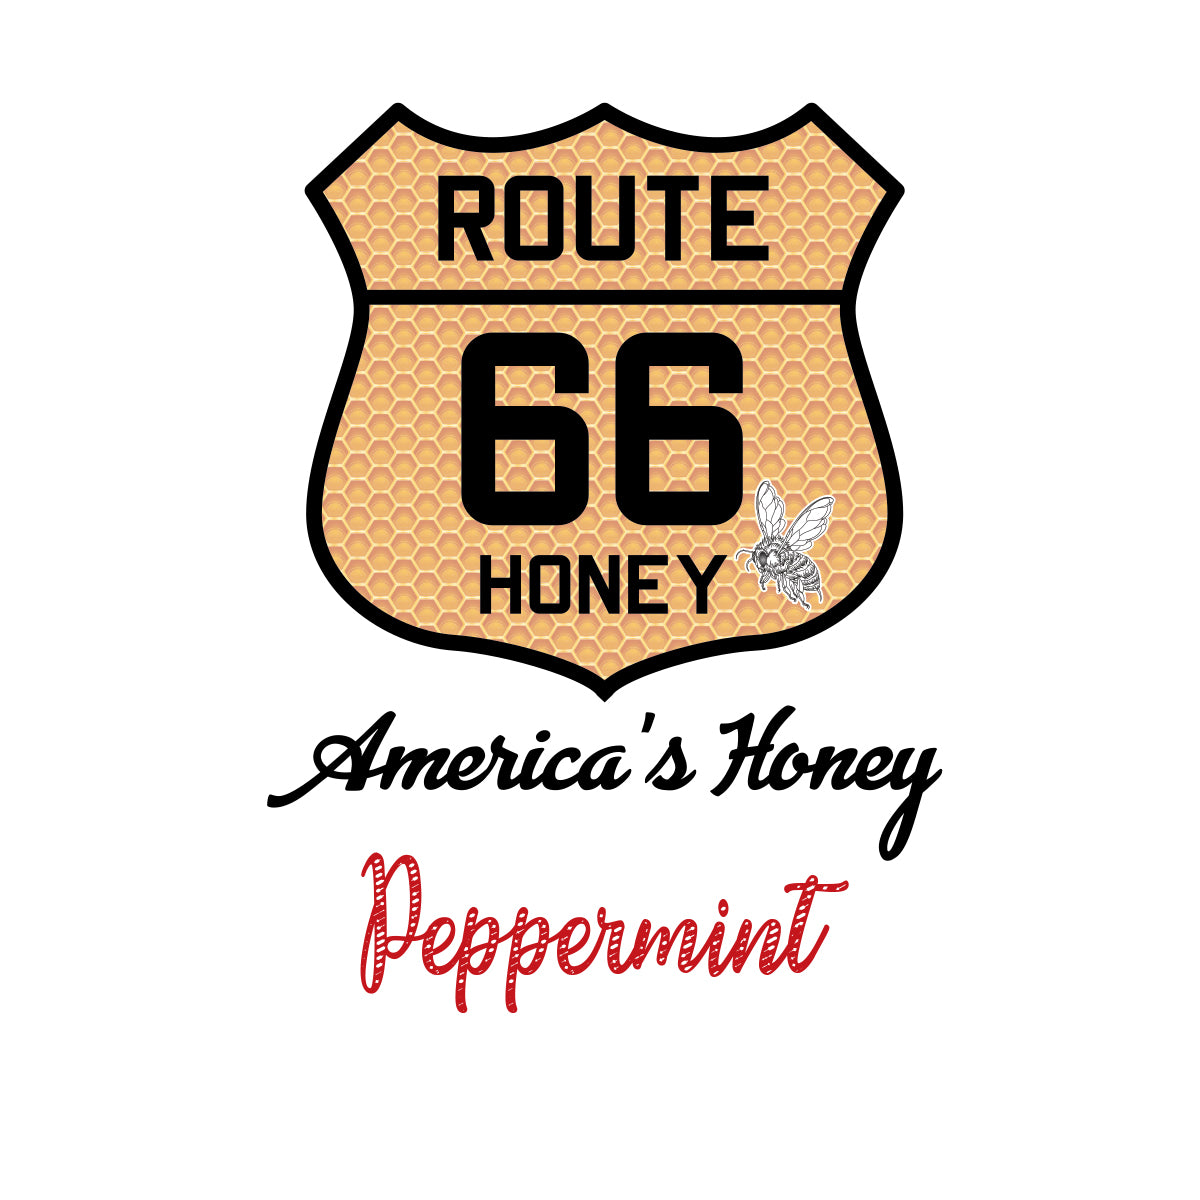 Peppermint Honey